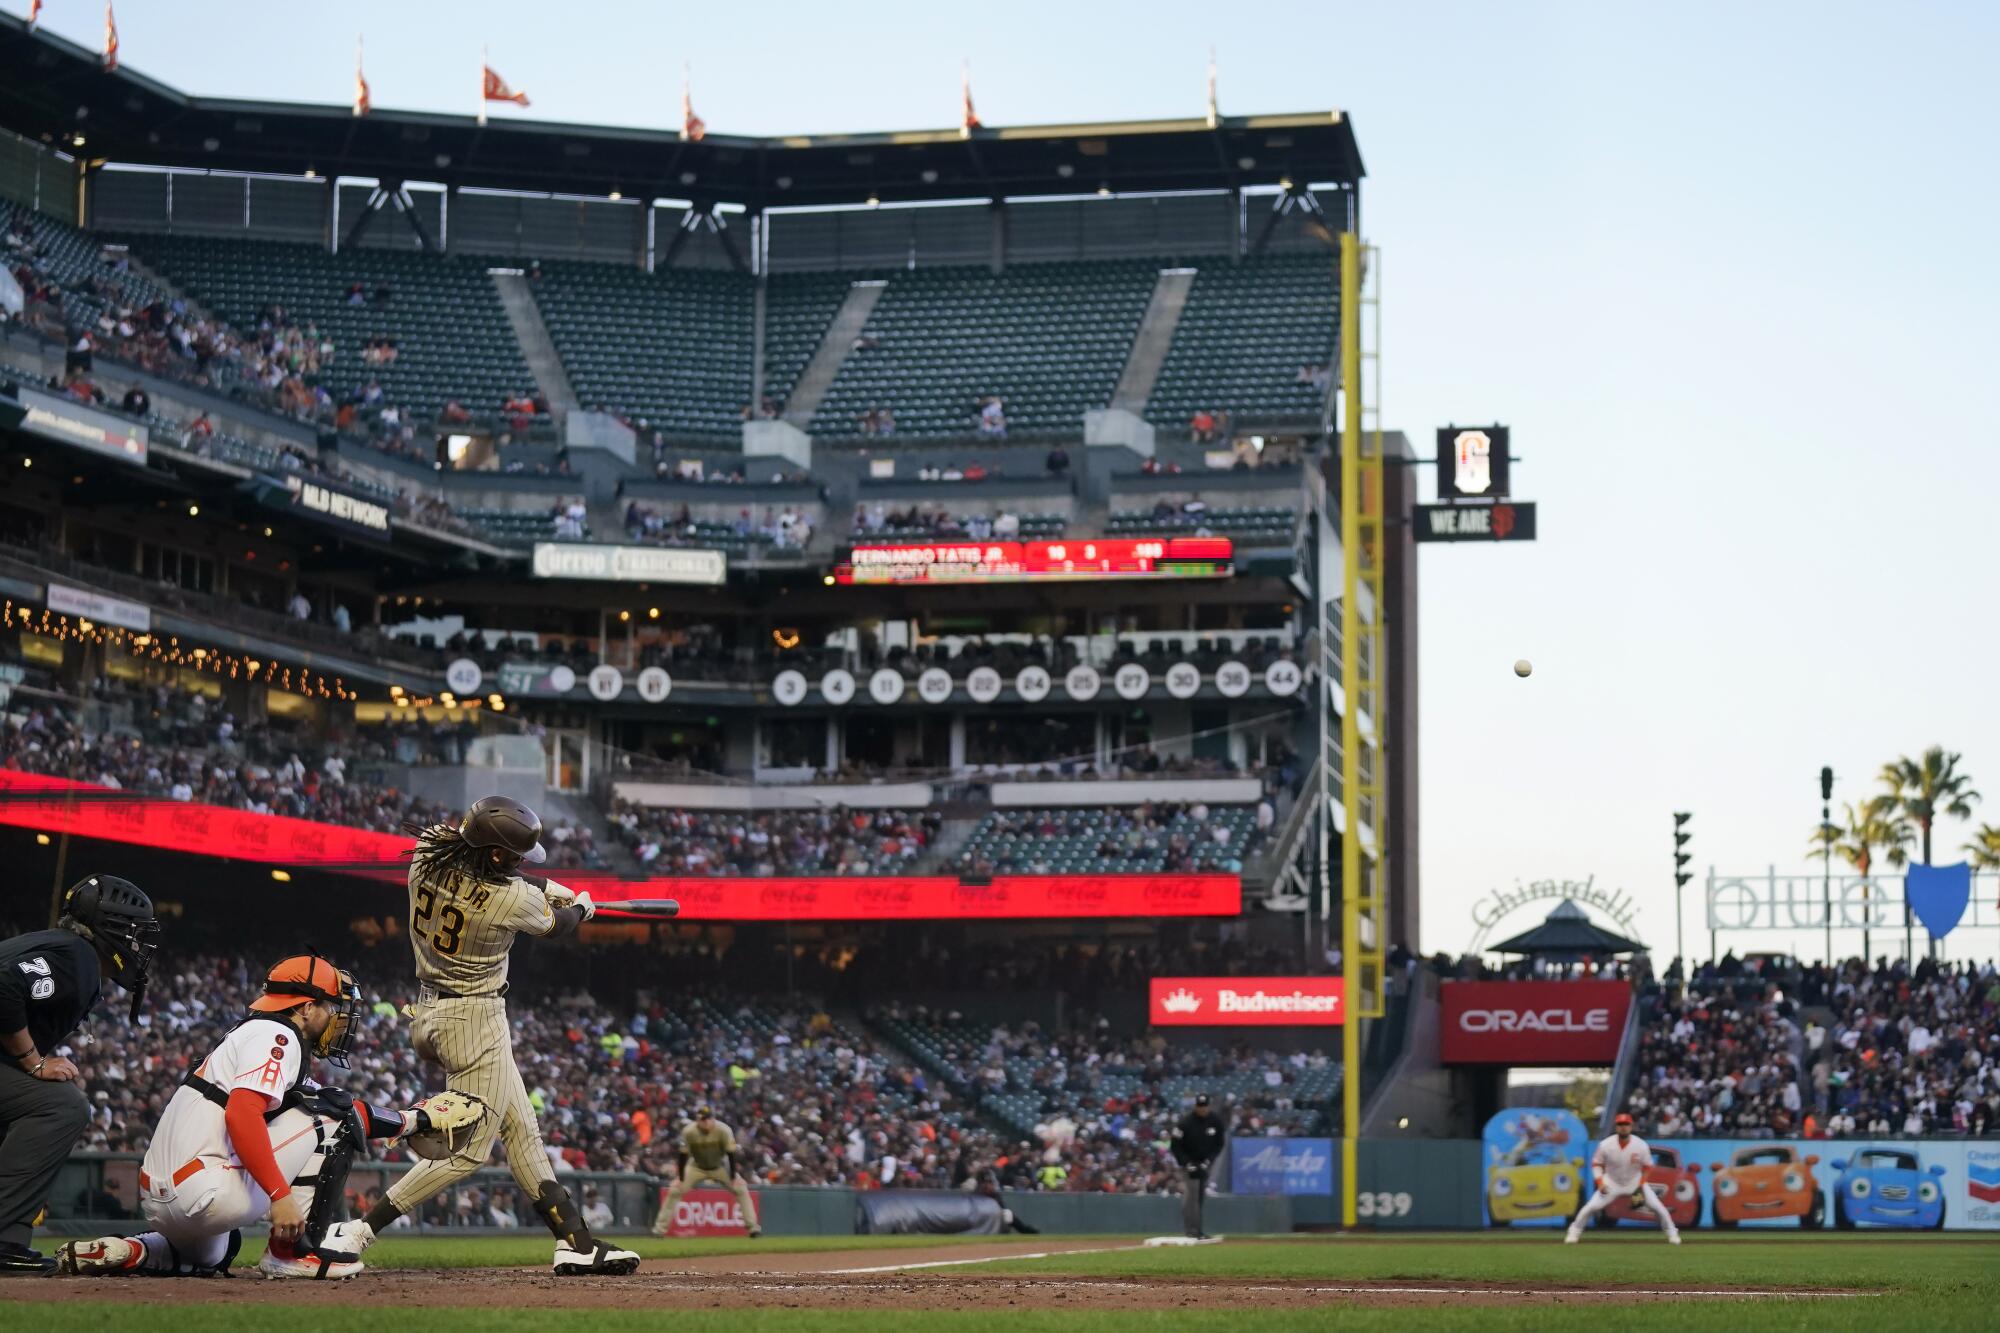 Joc Pederson shines as Giants walk off Padres again on Josh Hader's  bases-loaded walk – NBC Sports Bay Area & California